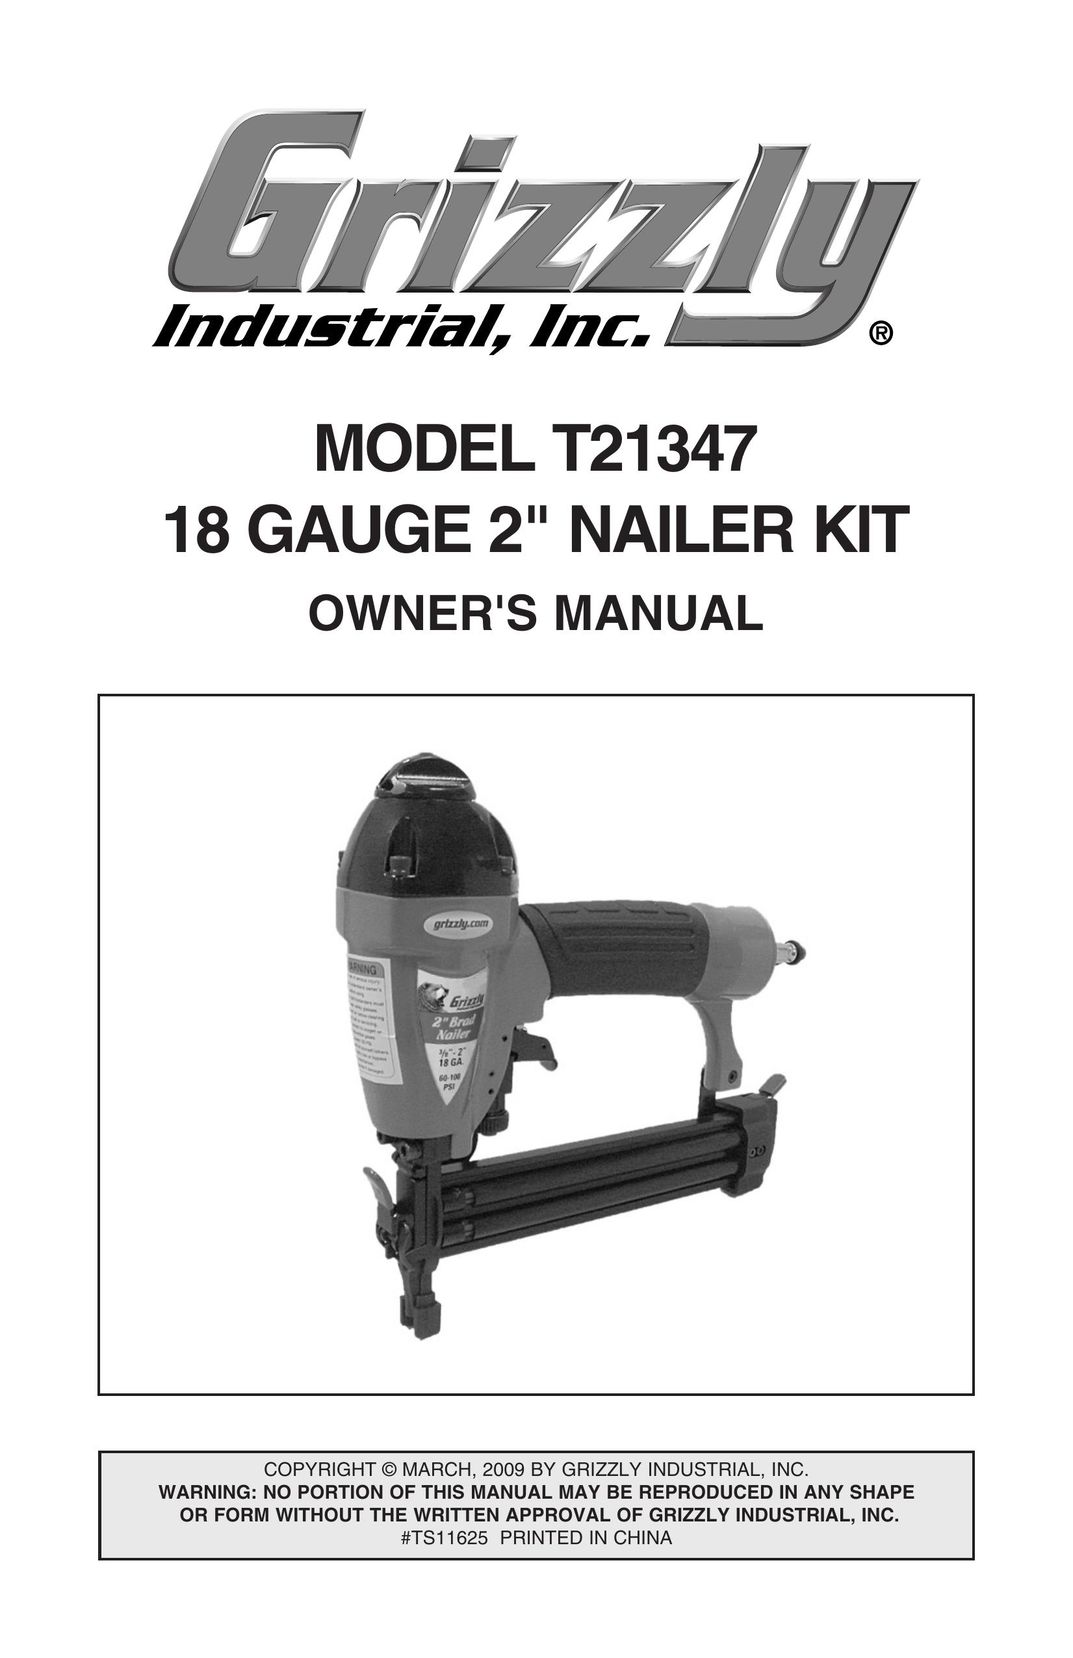 Grizzly T21347 Nail Gun User Manual